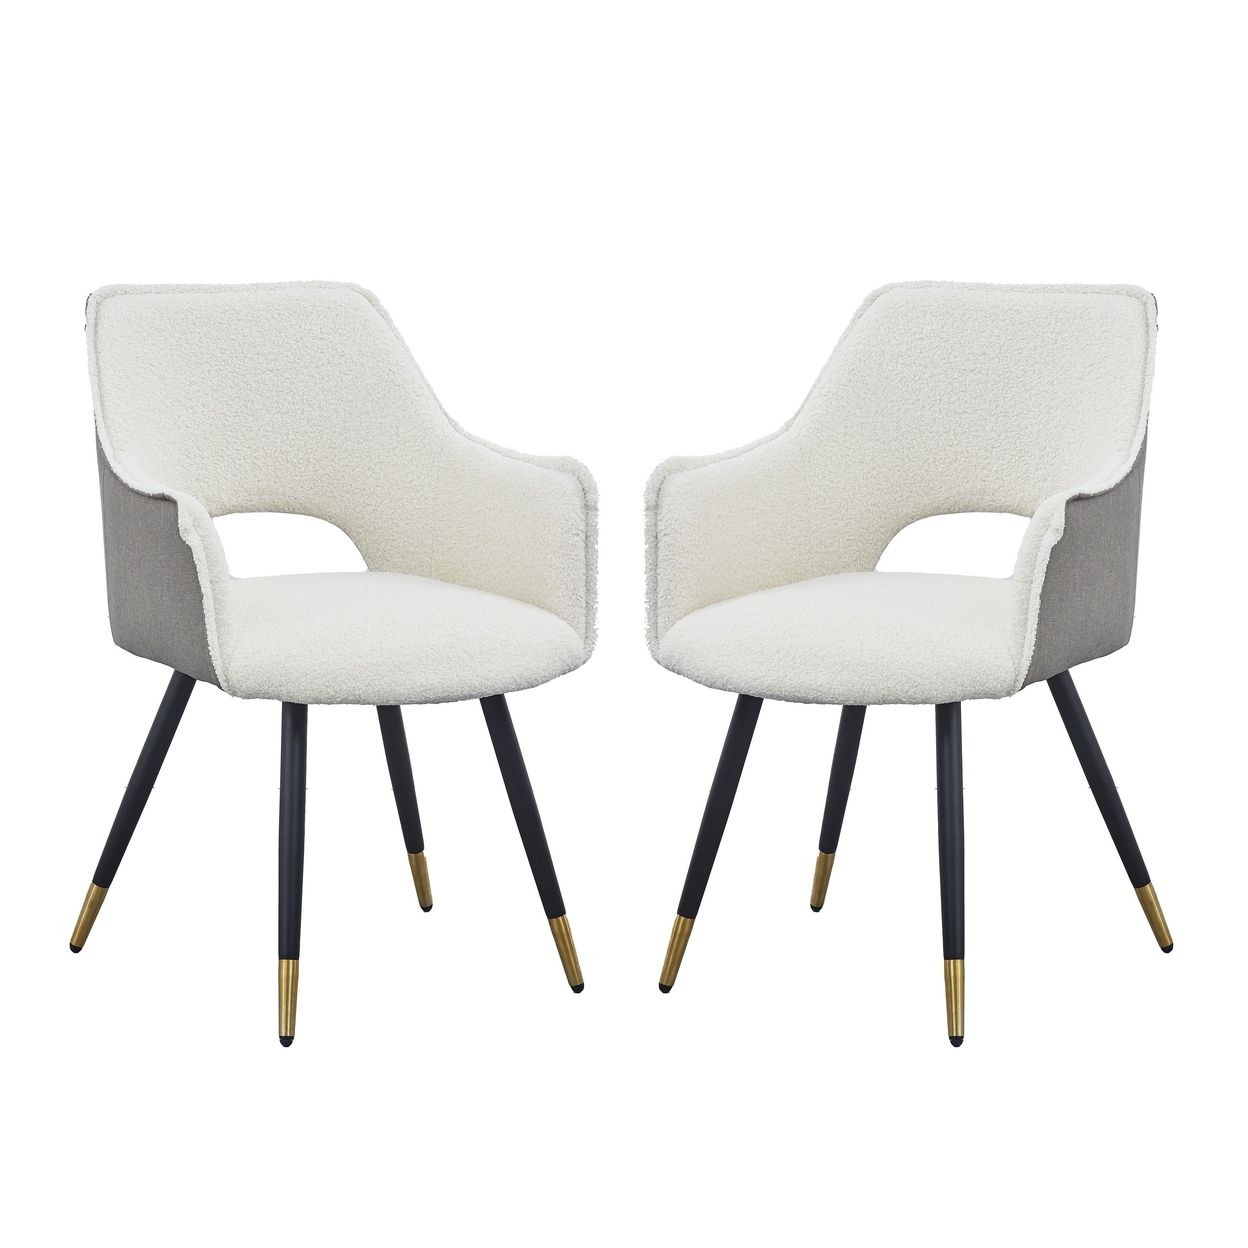 Eden 23 Inch Modern Dining Chair, White Fabric, Black Metal Legs, Set Of 2- Saltoro Sherpi